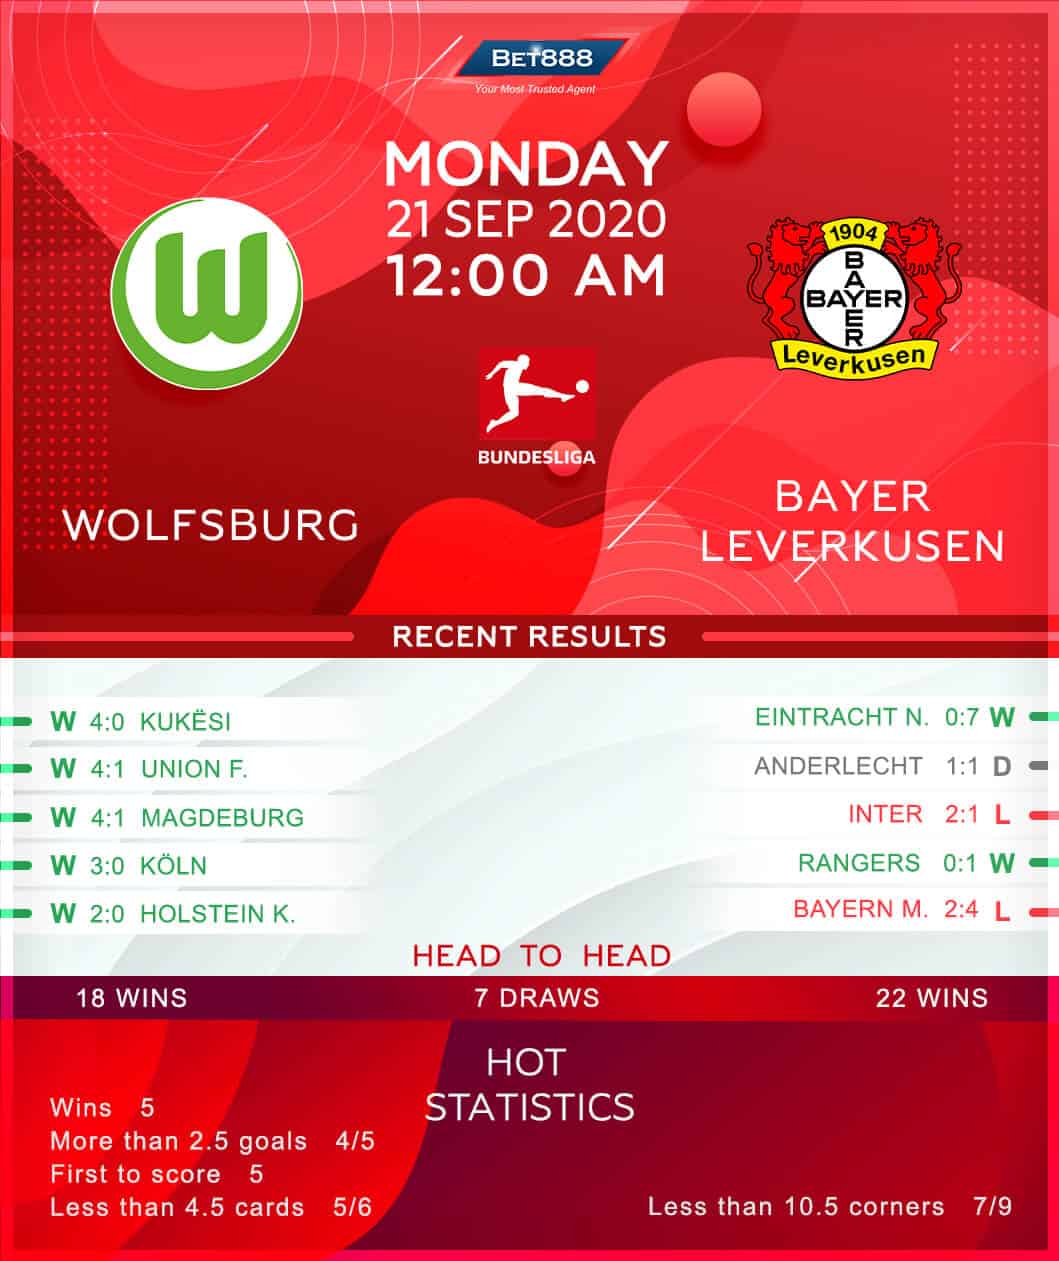 Wolfsburg vs Bayer Leverkusen 21/09/20